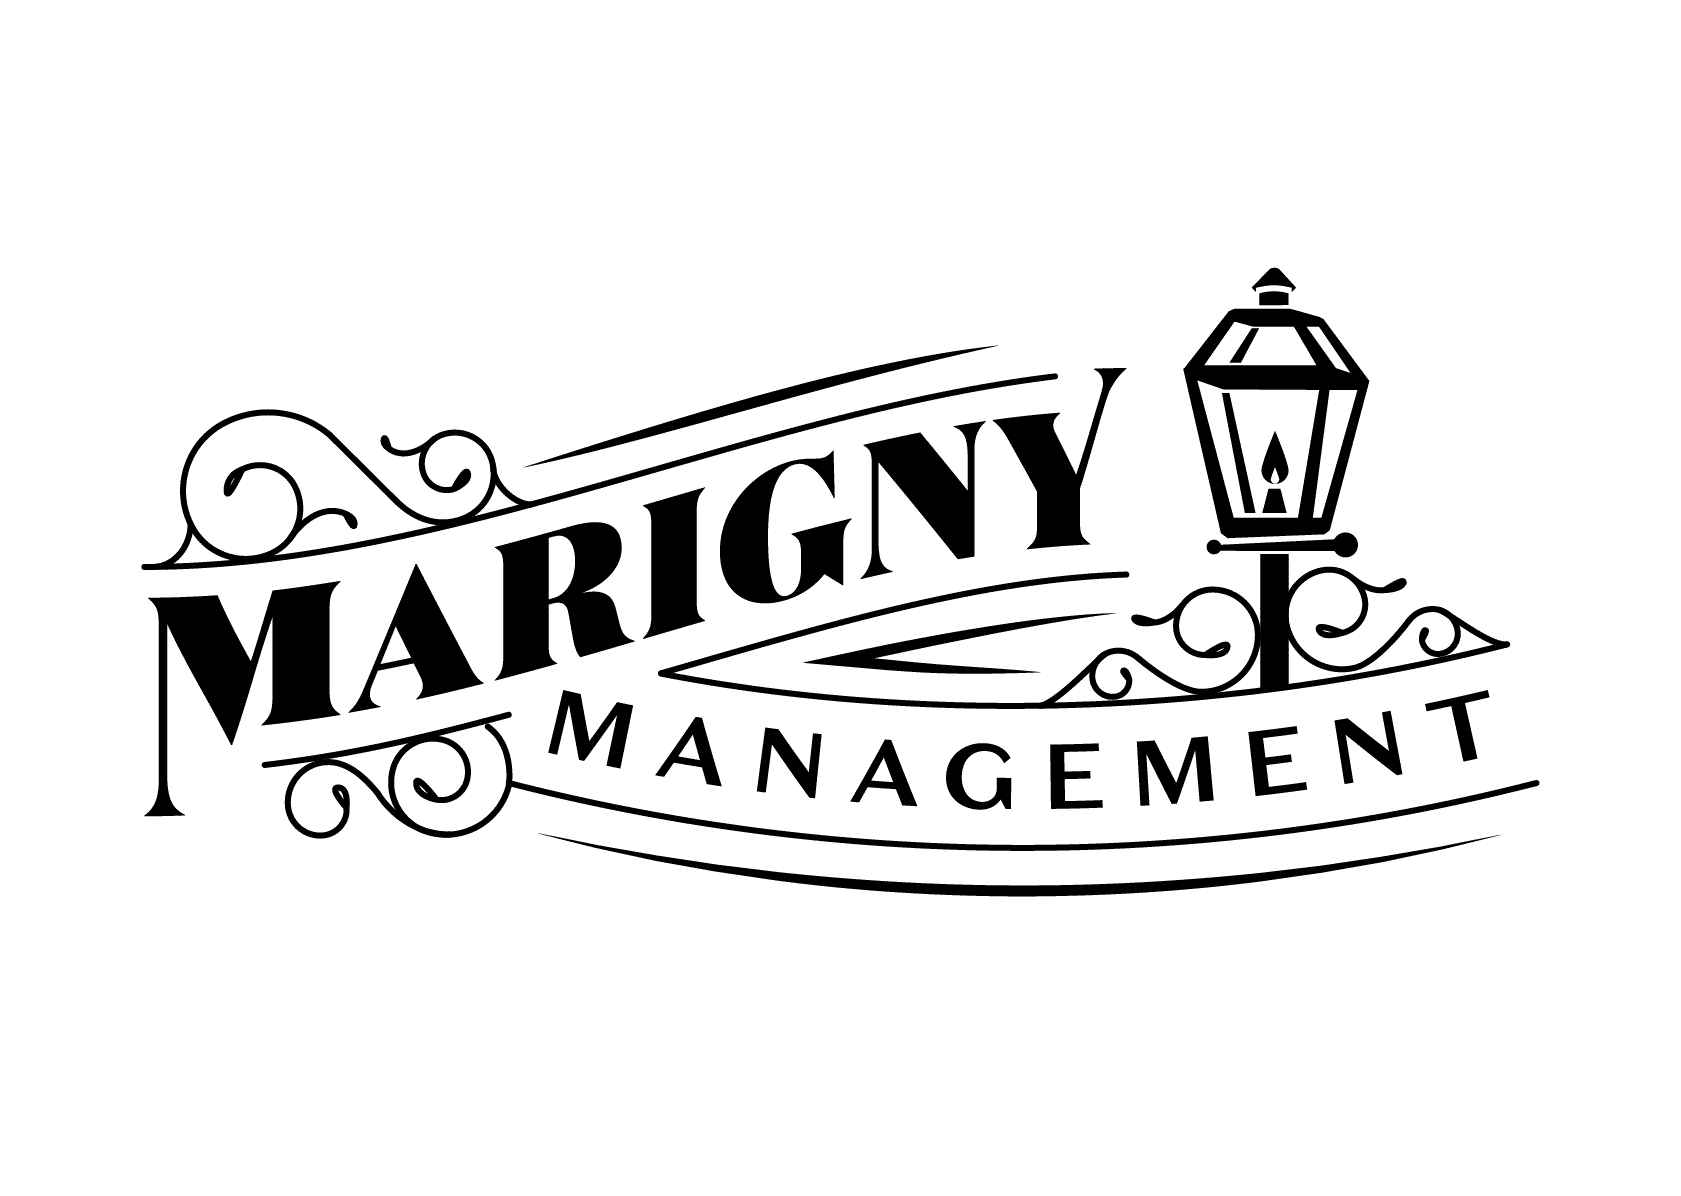 Marigny Management Monogram  Initials logo design, Letter logo